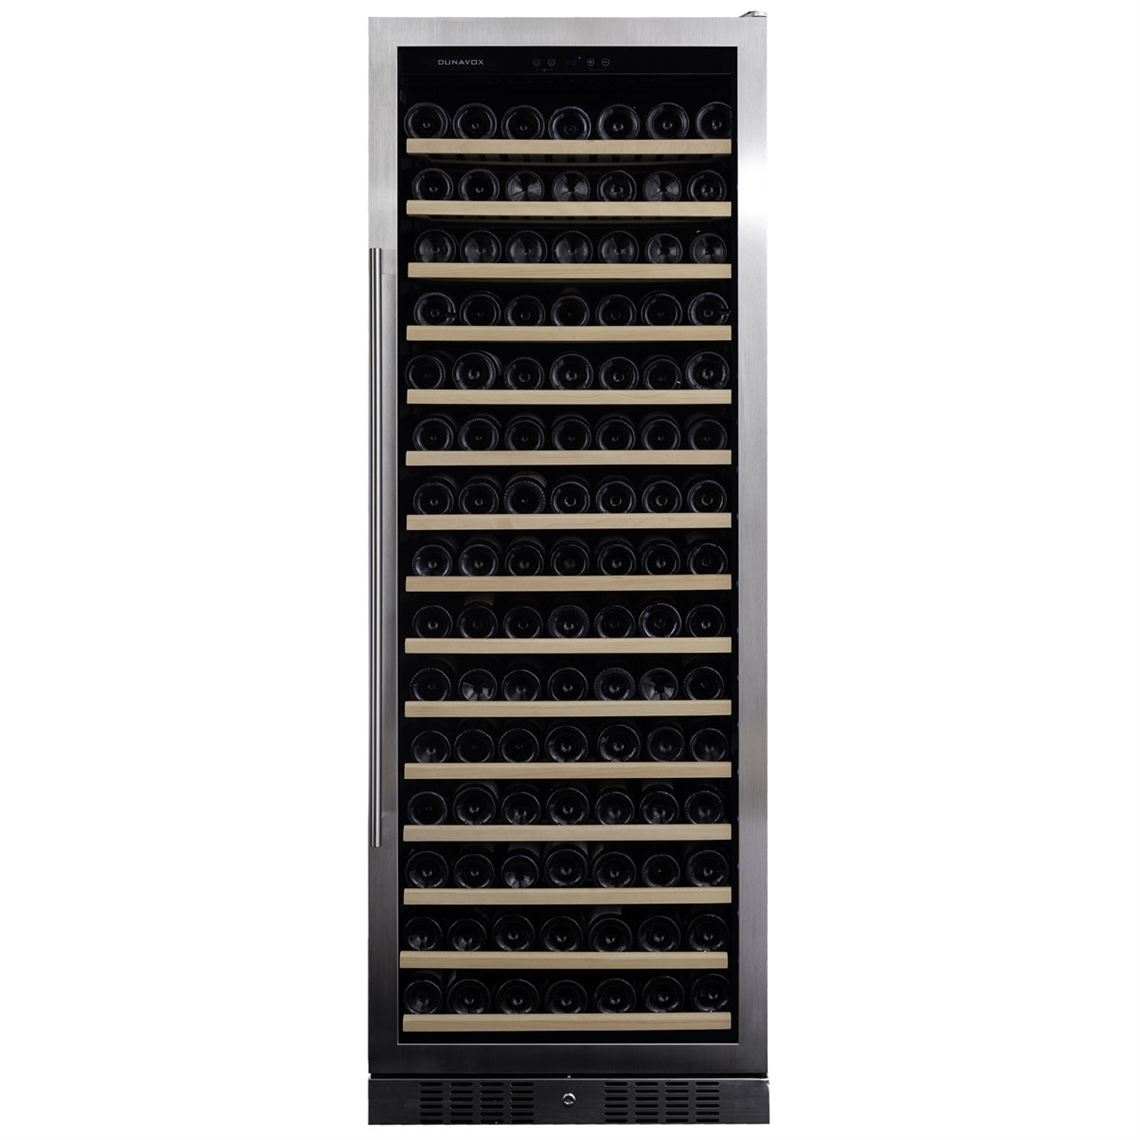 Dunavox Wine Cabinet Grande - Single Temperature Freestanding - Stainless Steel DX-194.490SSK